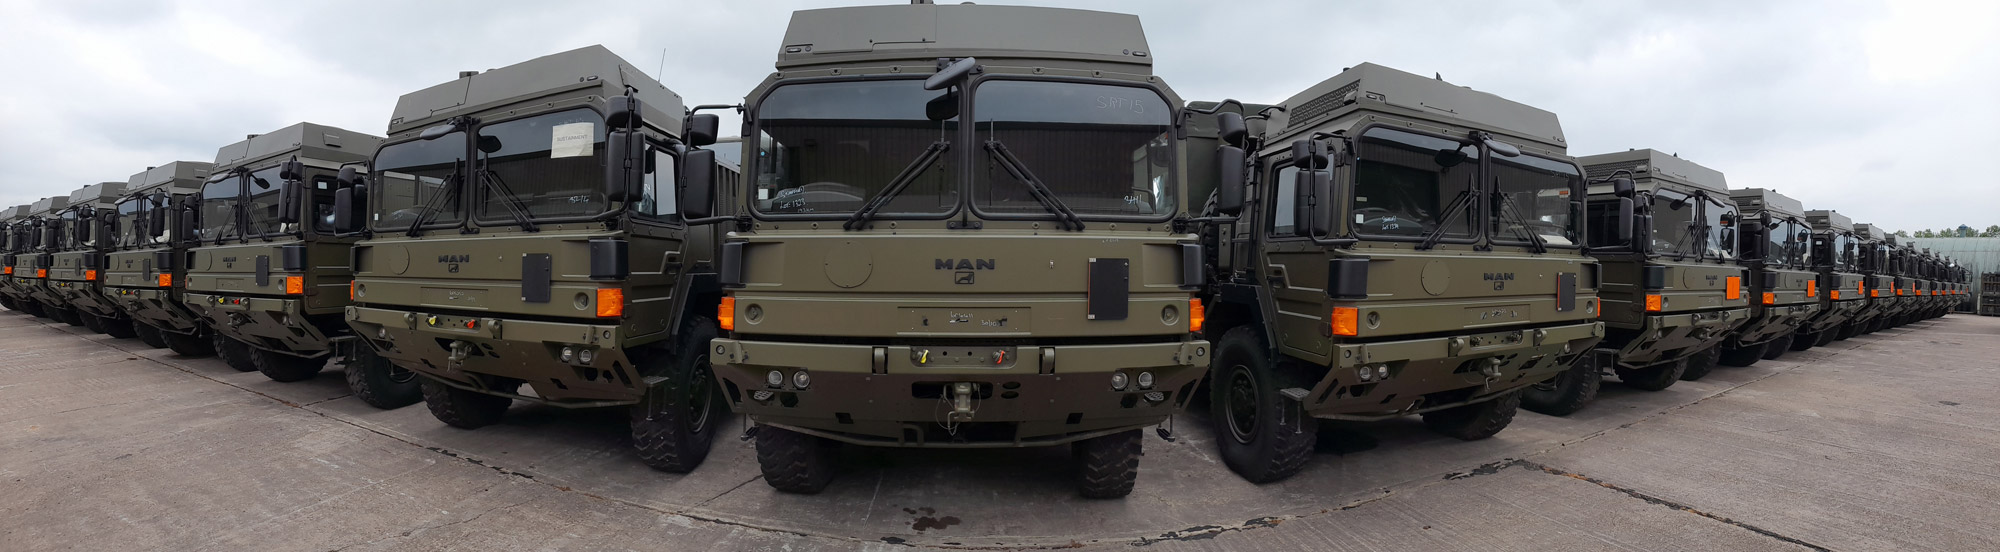 MAN HX60 18.330 ex military army cargo trucks for sale